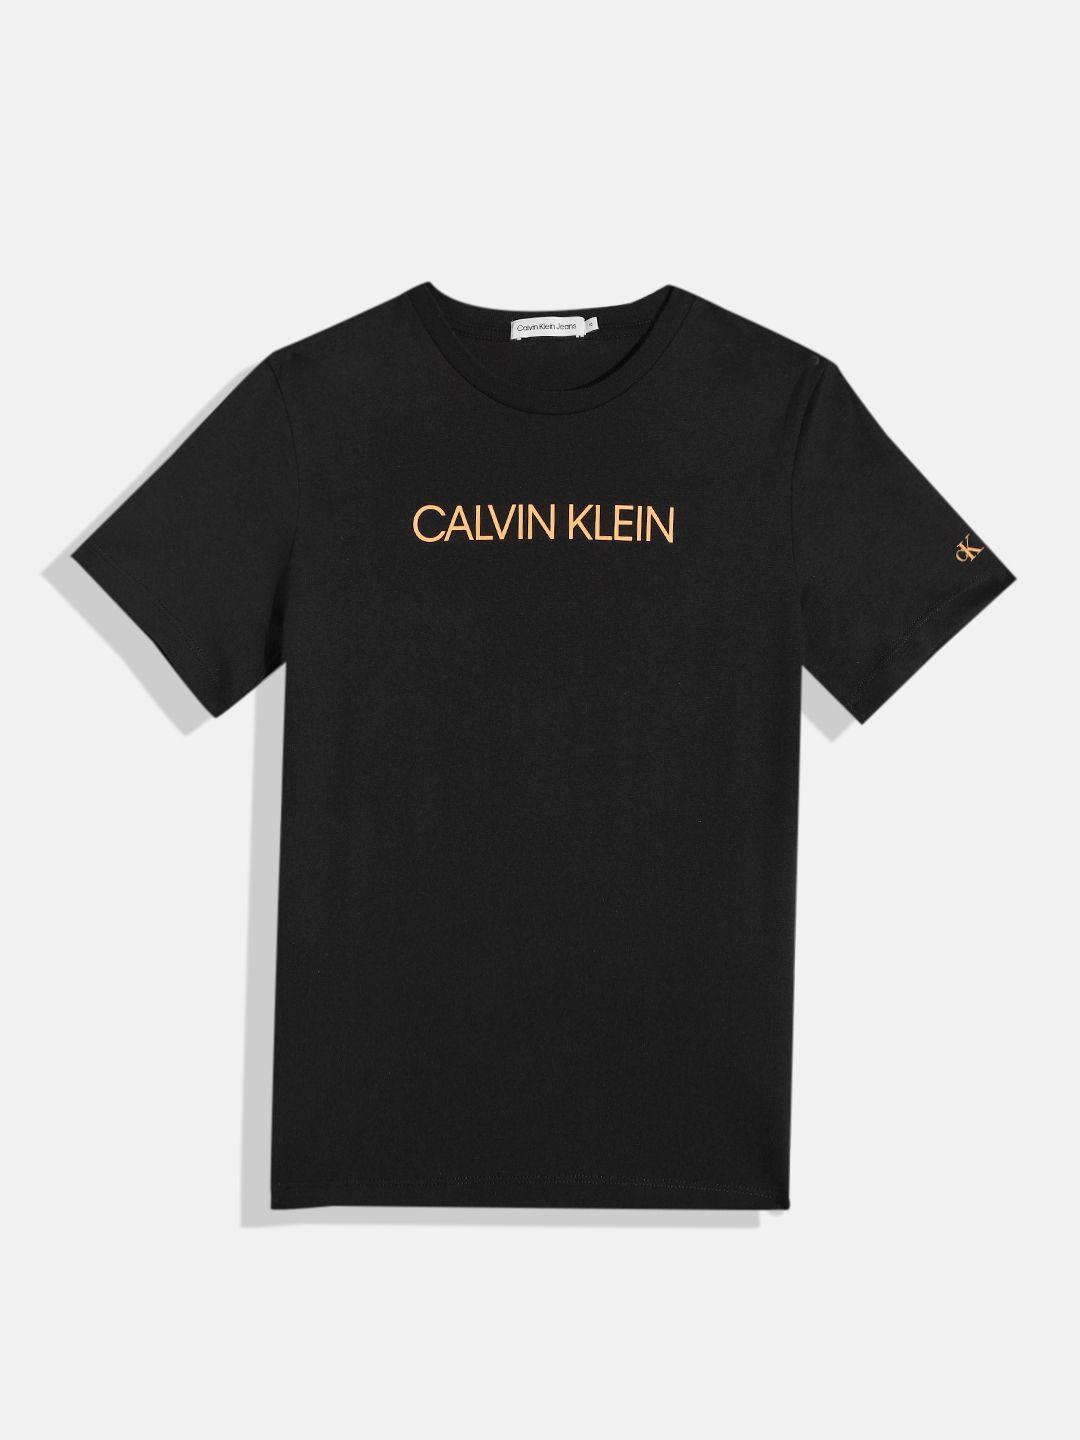 calvin klein jeans kids brand logo printed pure cotton t-shirt